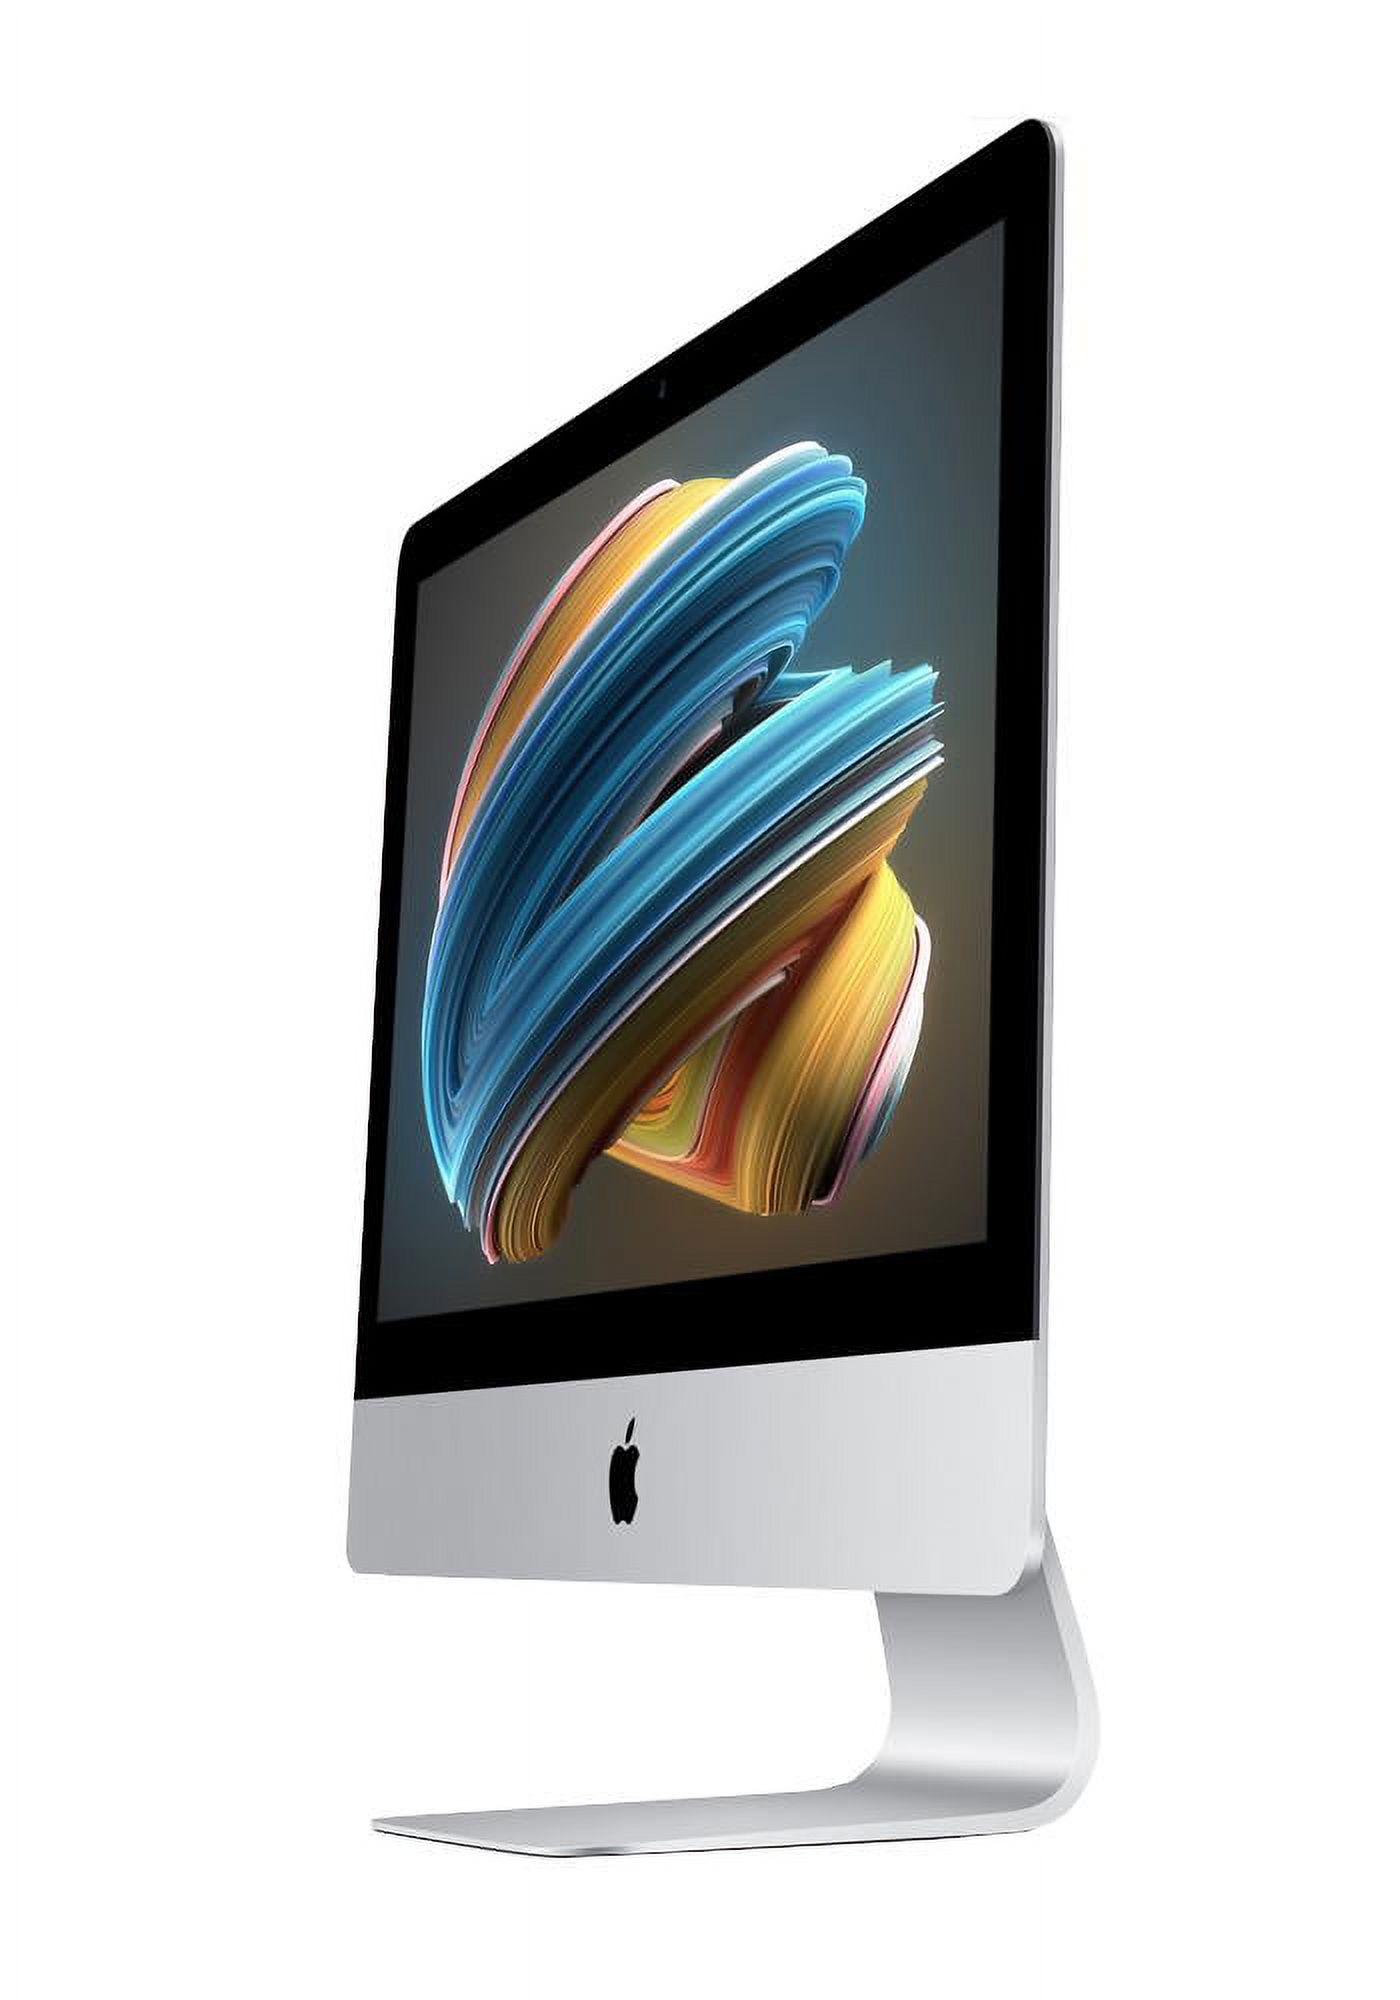 Apple A Grade Desktop Computer iMac 27-inch (Retina 5K) 3.4GHZ Quad Core i5 (Mid 2017) MNE92LL/A 24 GB 3 TB HDD 5120 x 2880 Display Dual Boot Hi Sierra/Windows 10 Pro Keyboard and Mouse - image 2 of 3